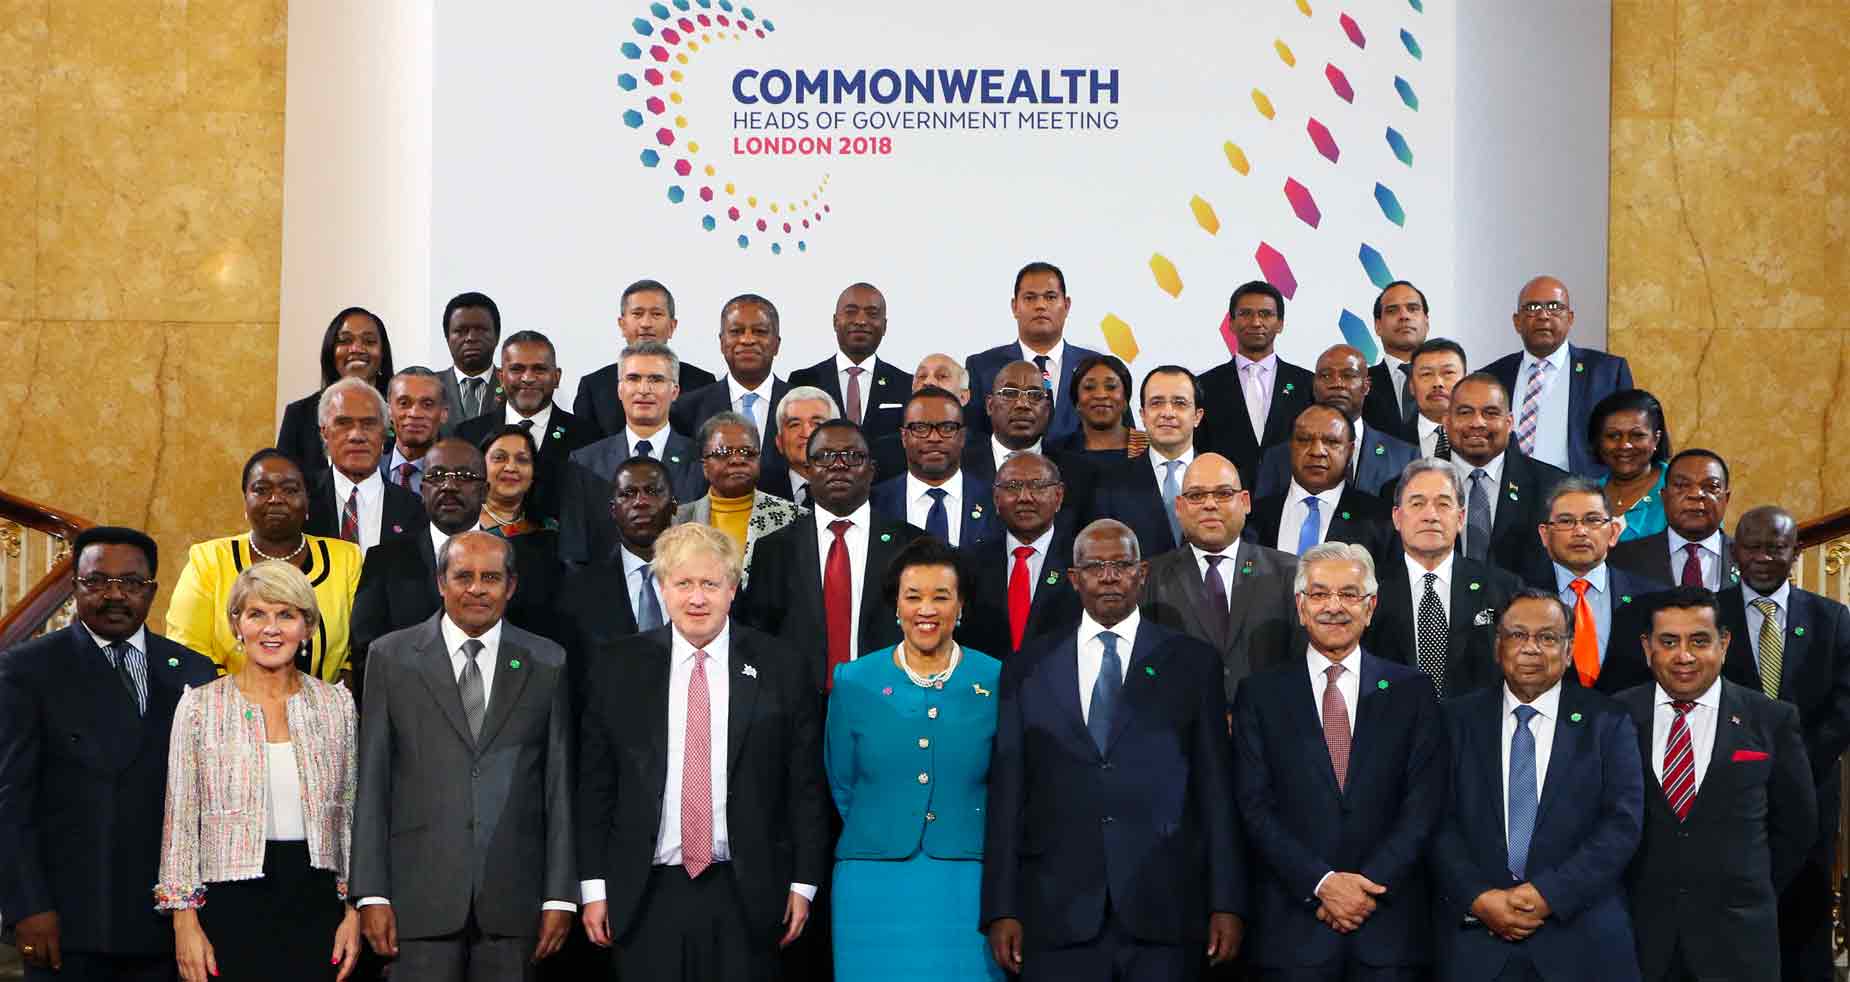 The Commonwealth 1